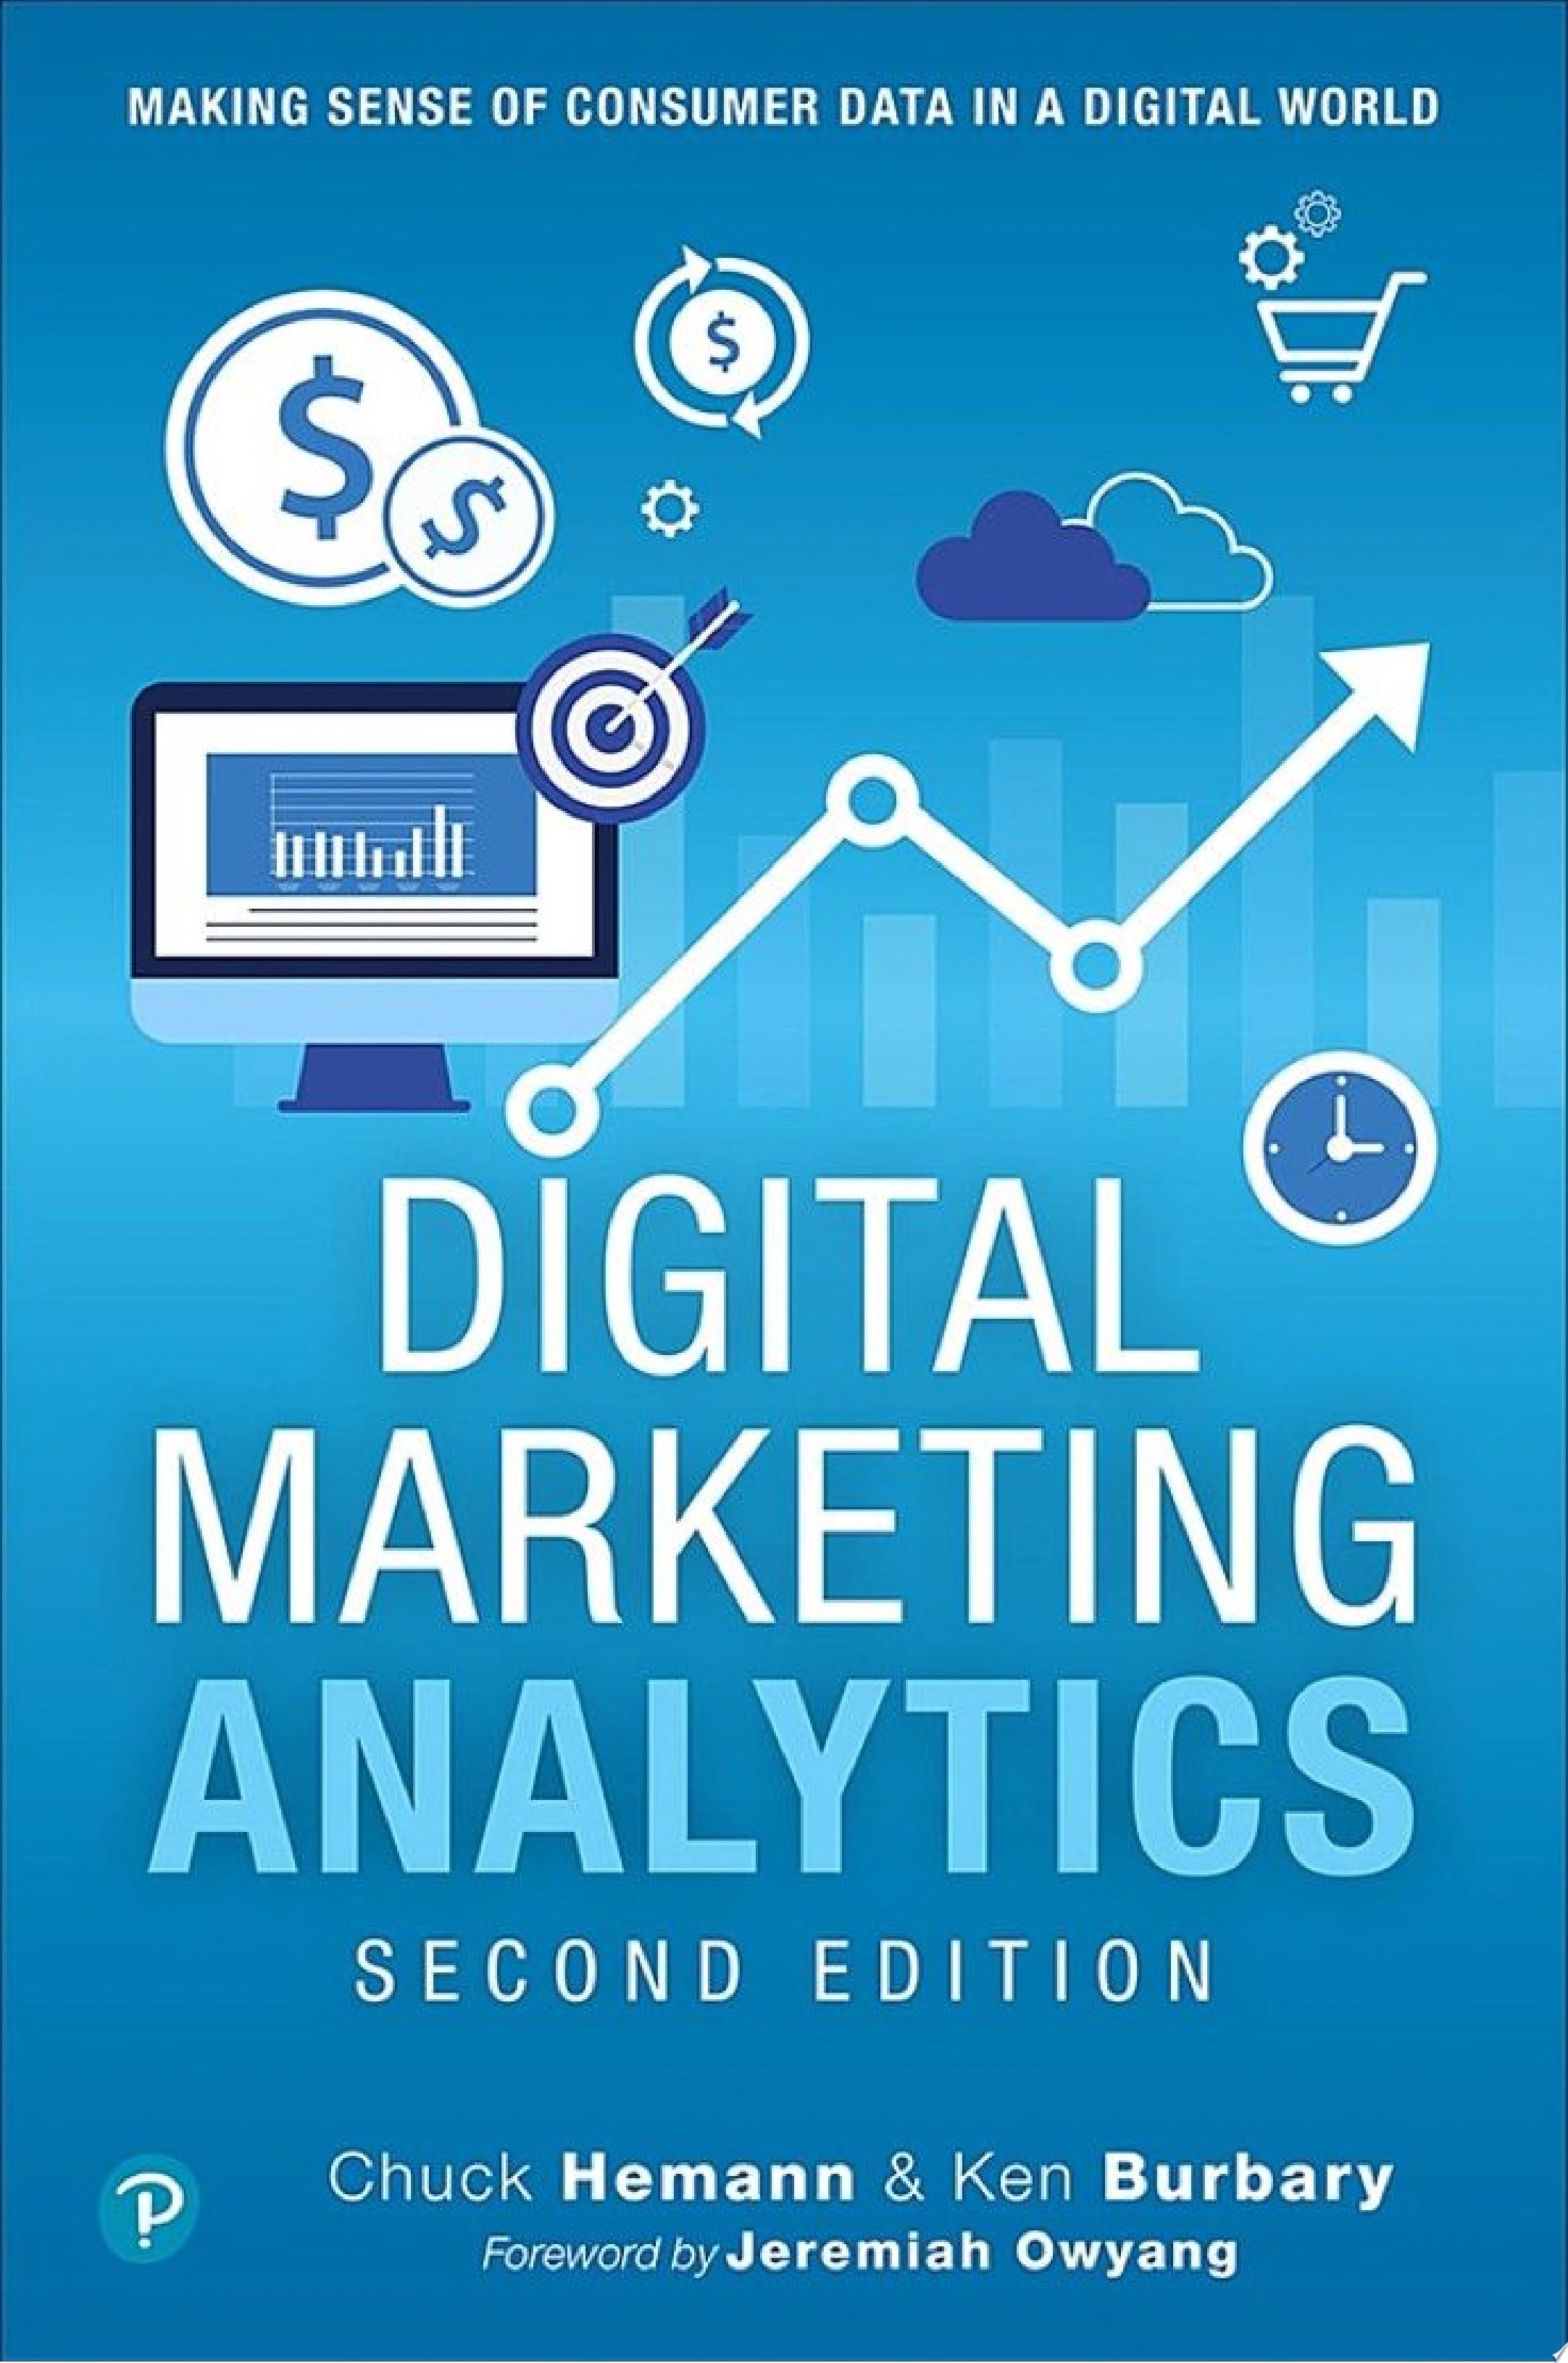 Image for "Digital Marketing Analytics"